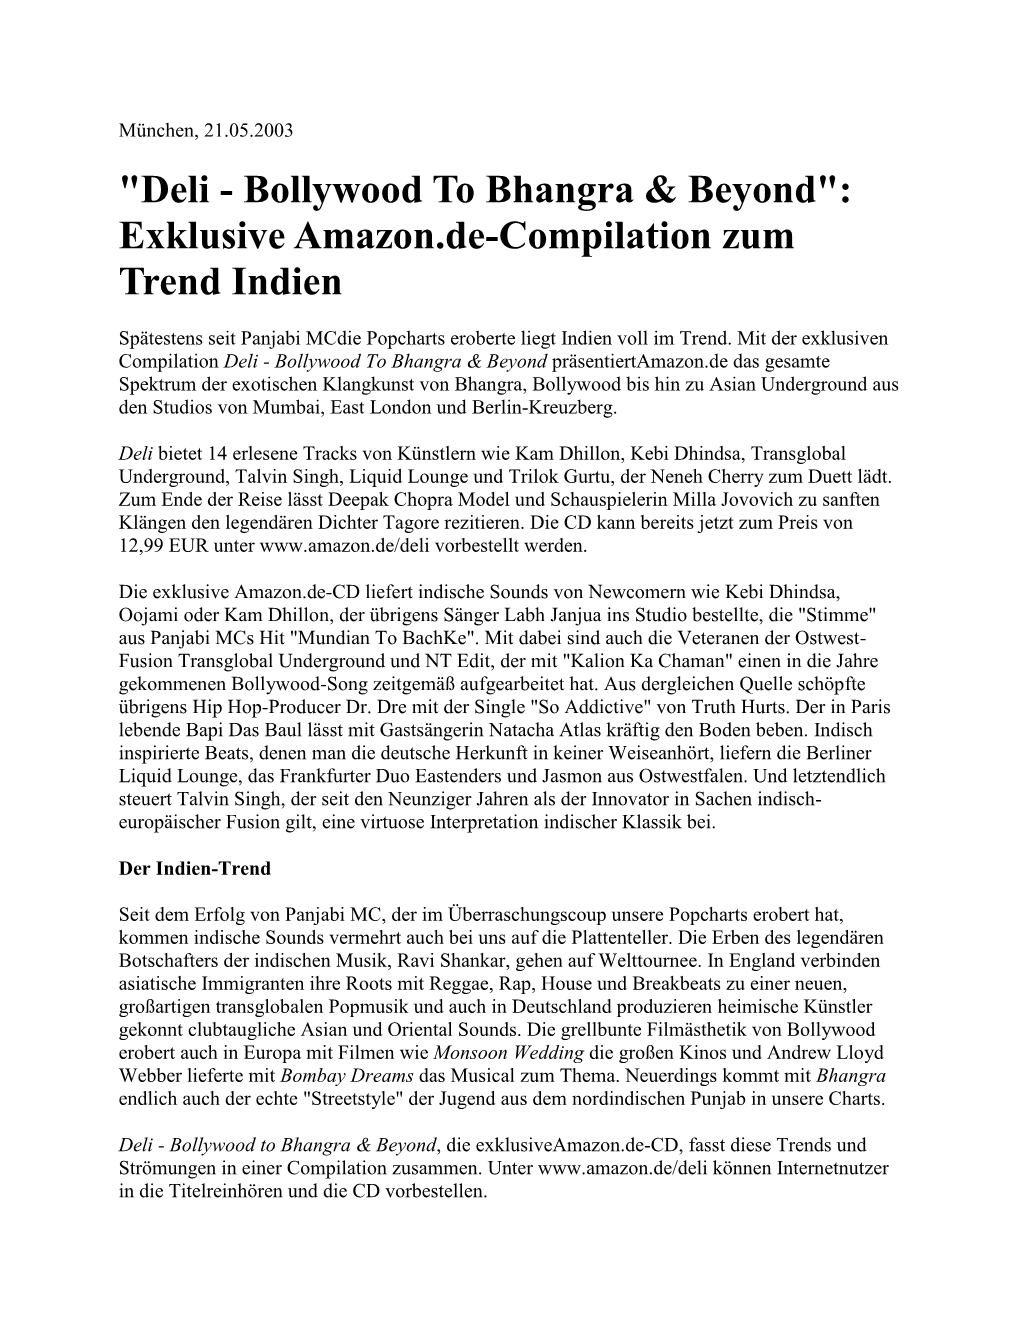 "Deli - Bollywood to Bhangra & Beyond": Exklusive Amazon.De-Compilation Zum Trend Indien